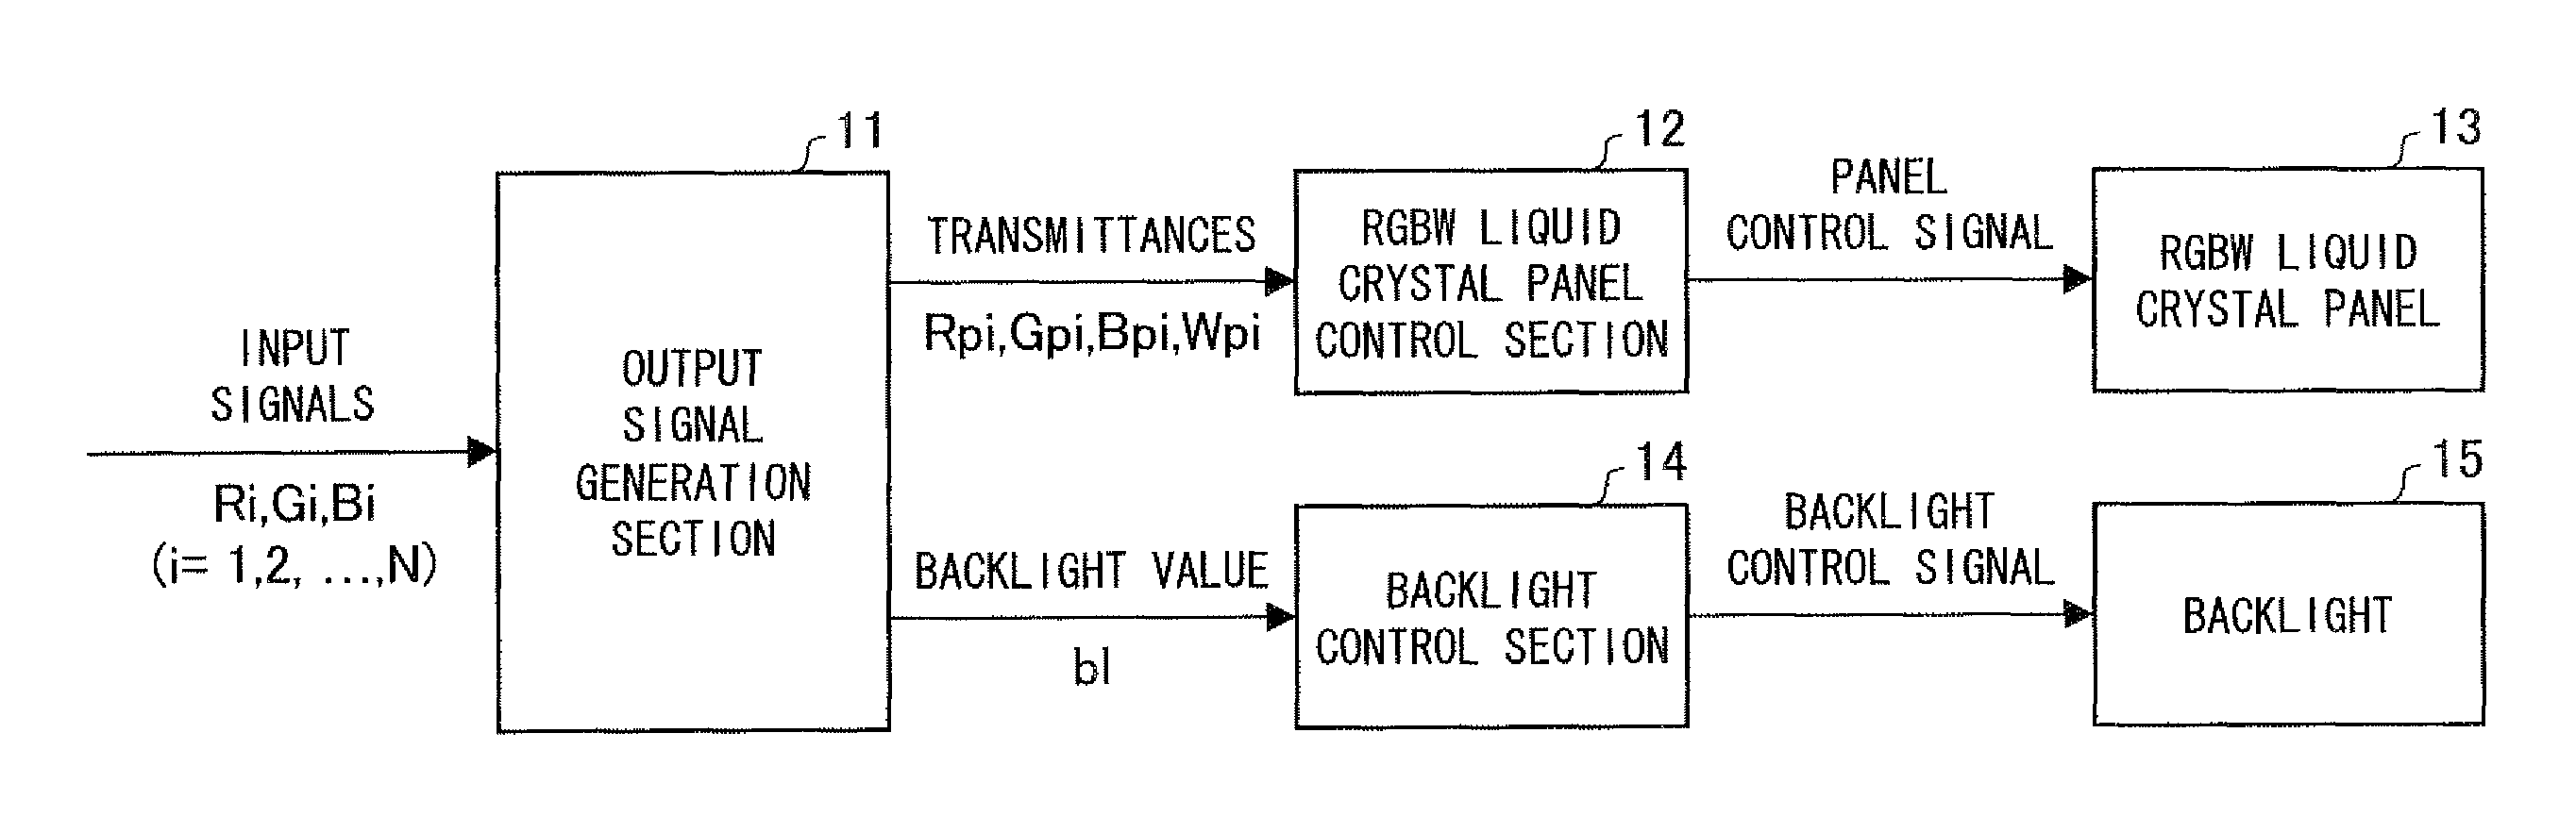 Transmission liquid crystal display device